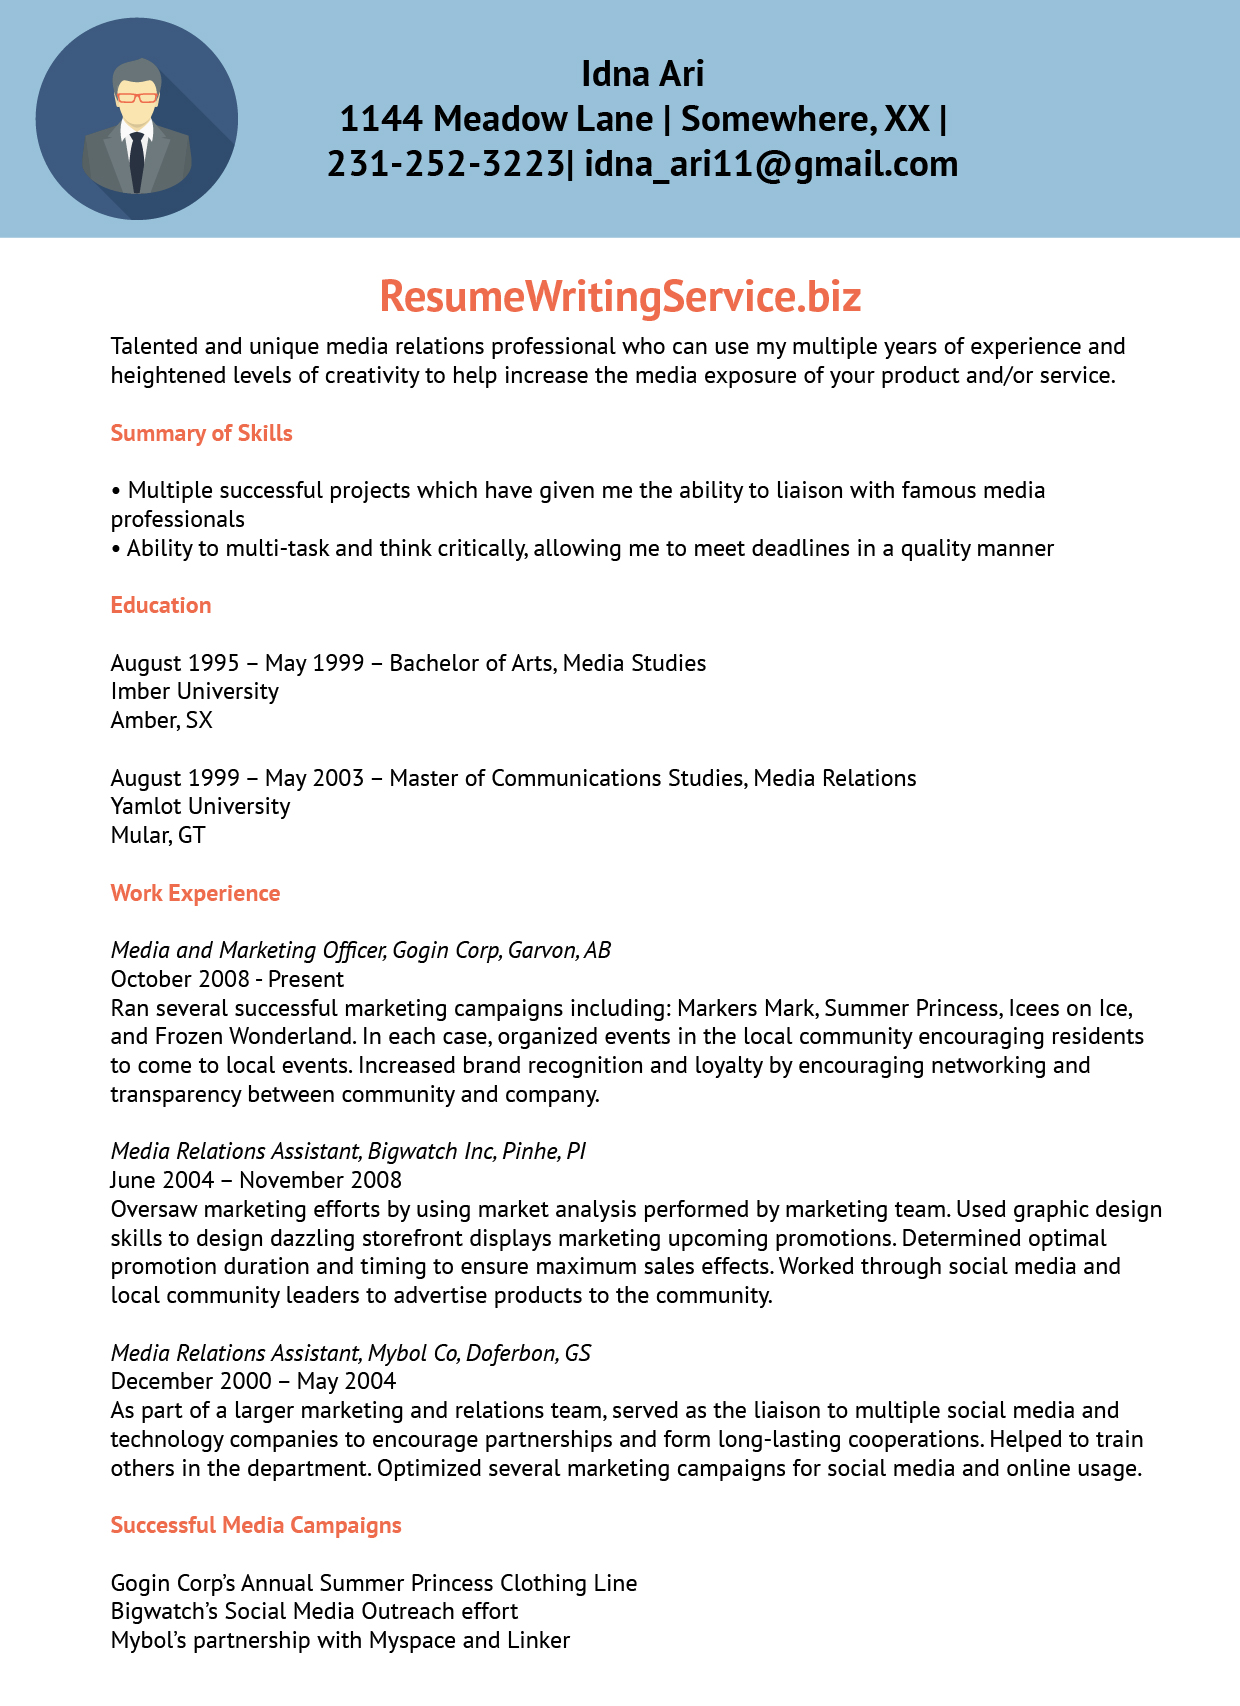 Marketing resume writing service